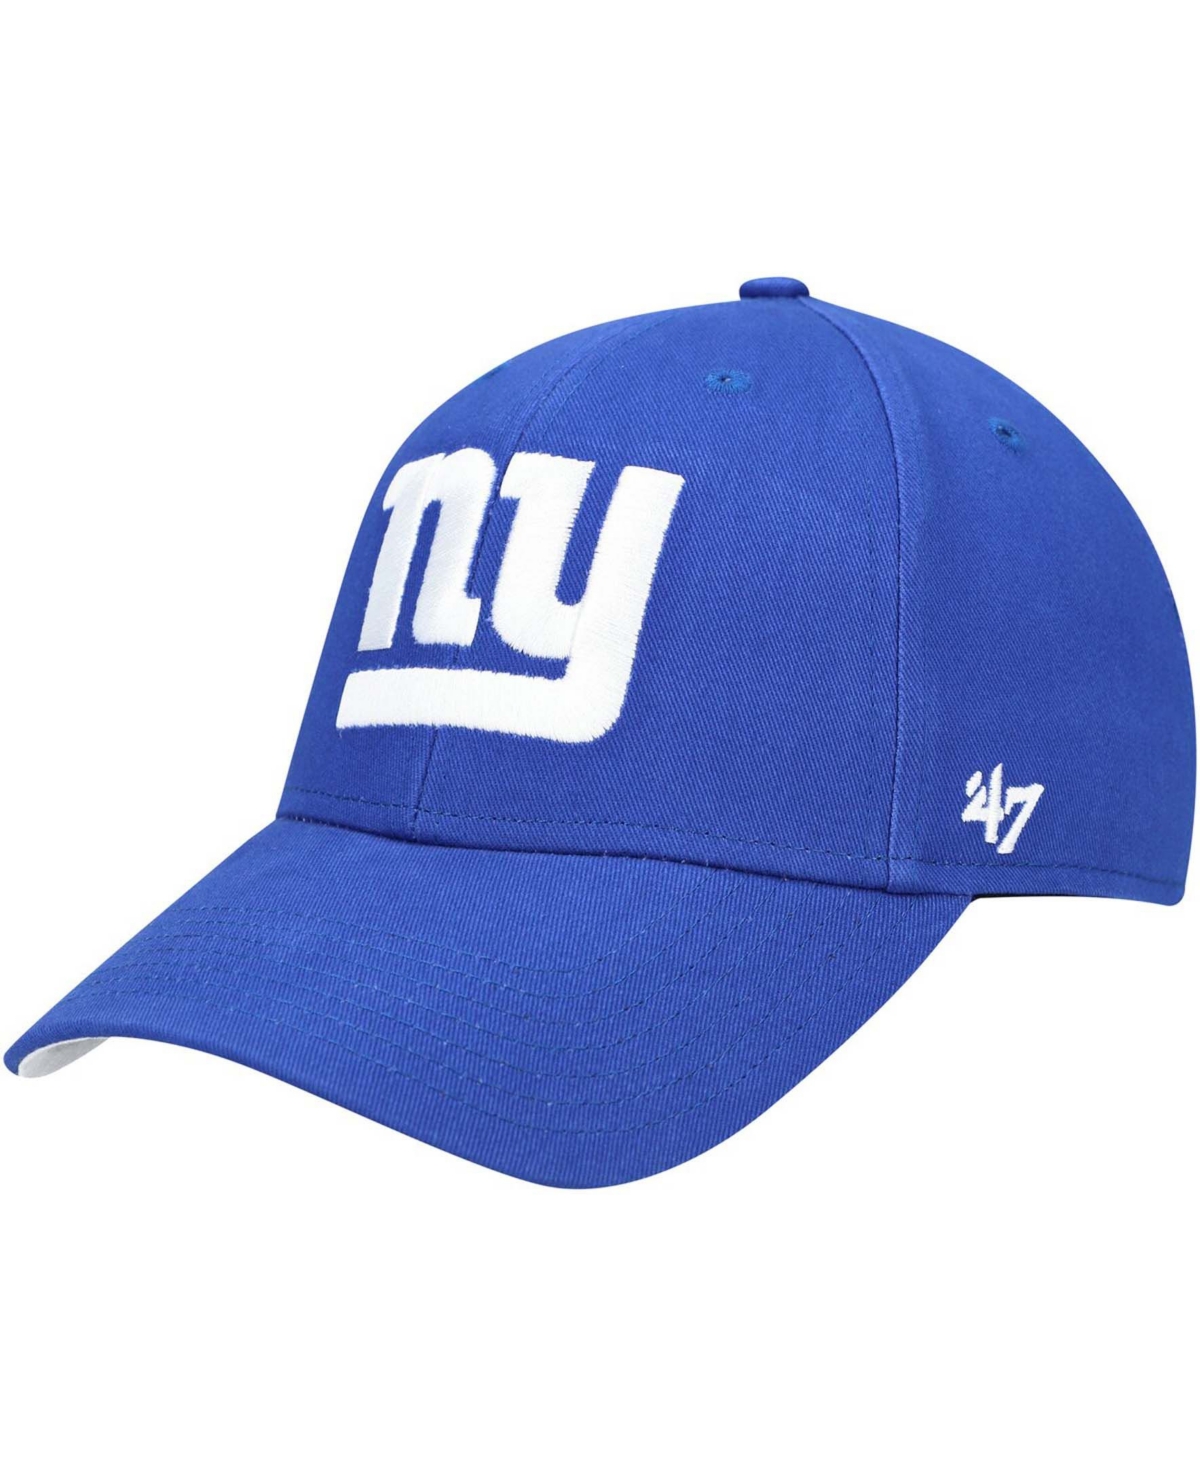 47 Brand Babies' Boys Royal New York Giants Basic Mvp Adjustable Hat